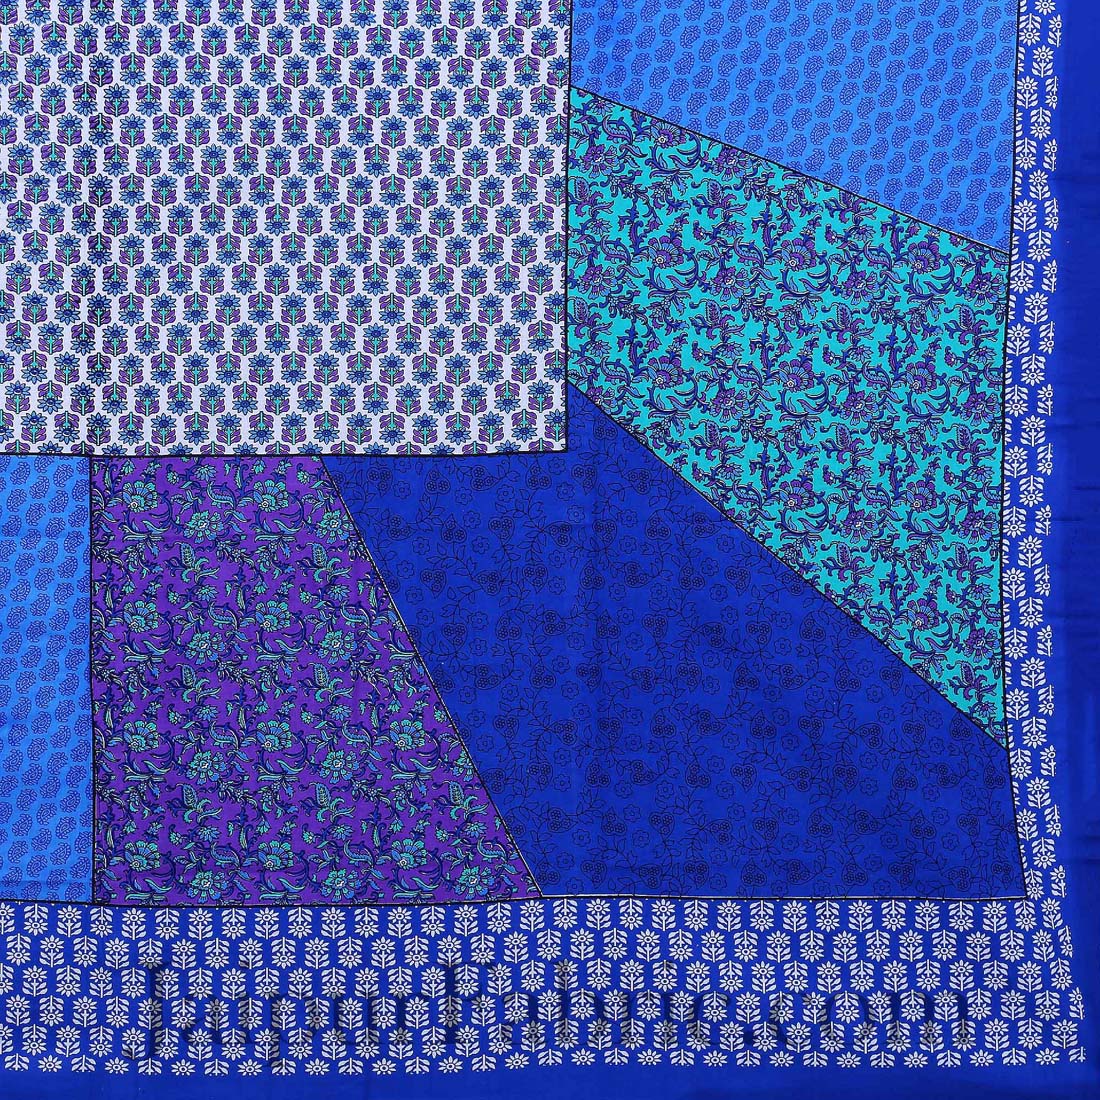 Festive Blue Multi Color Stripe Printed Cotton Bedsheet